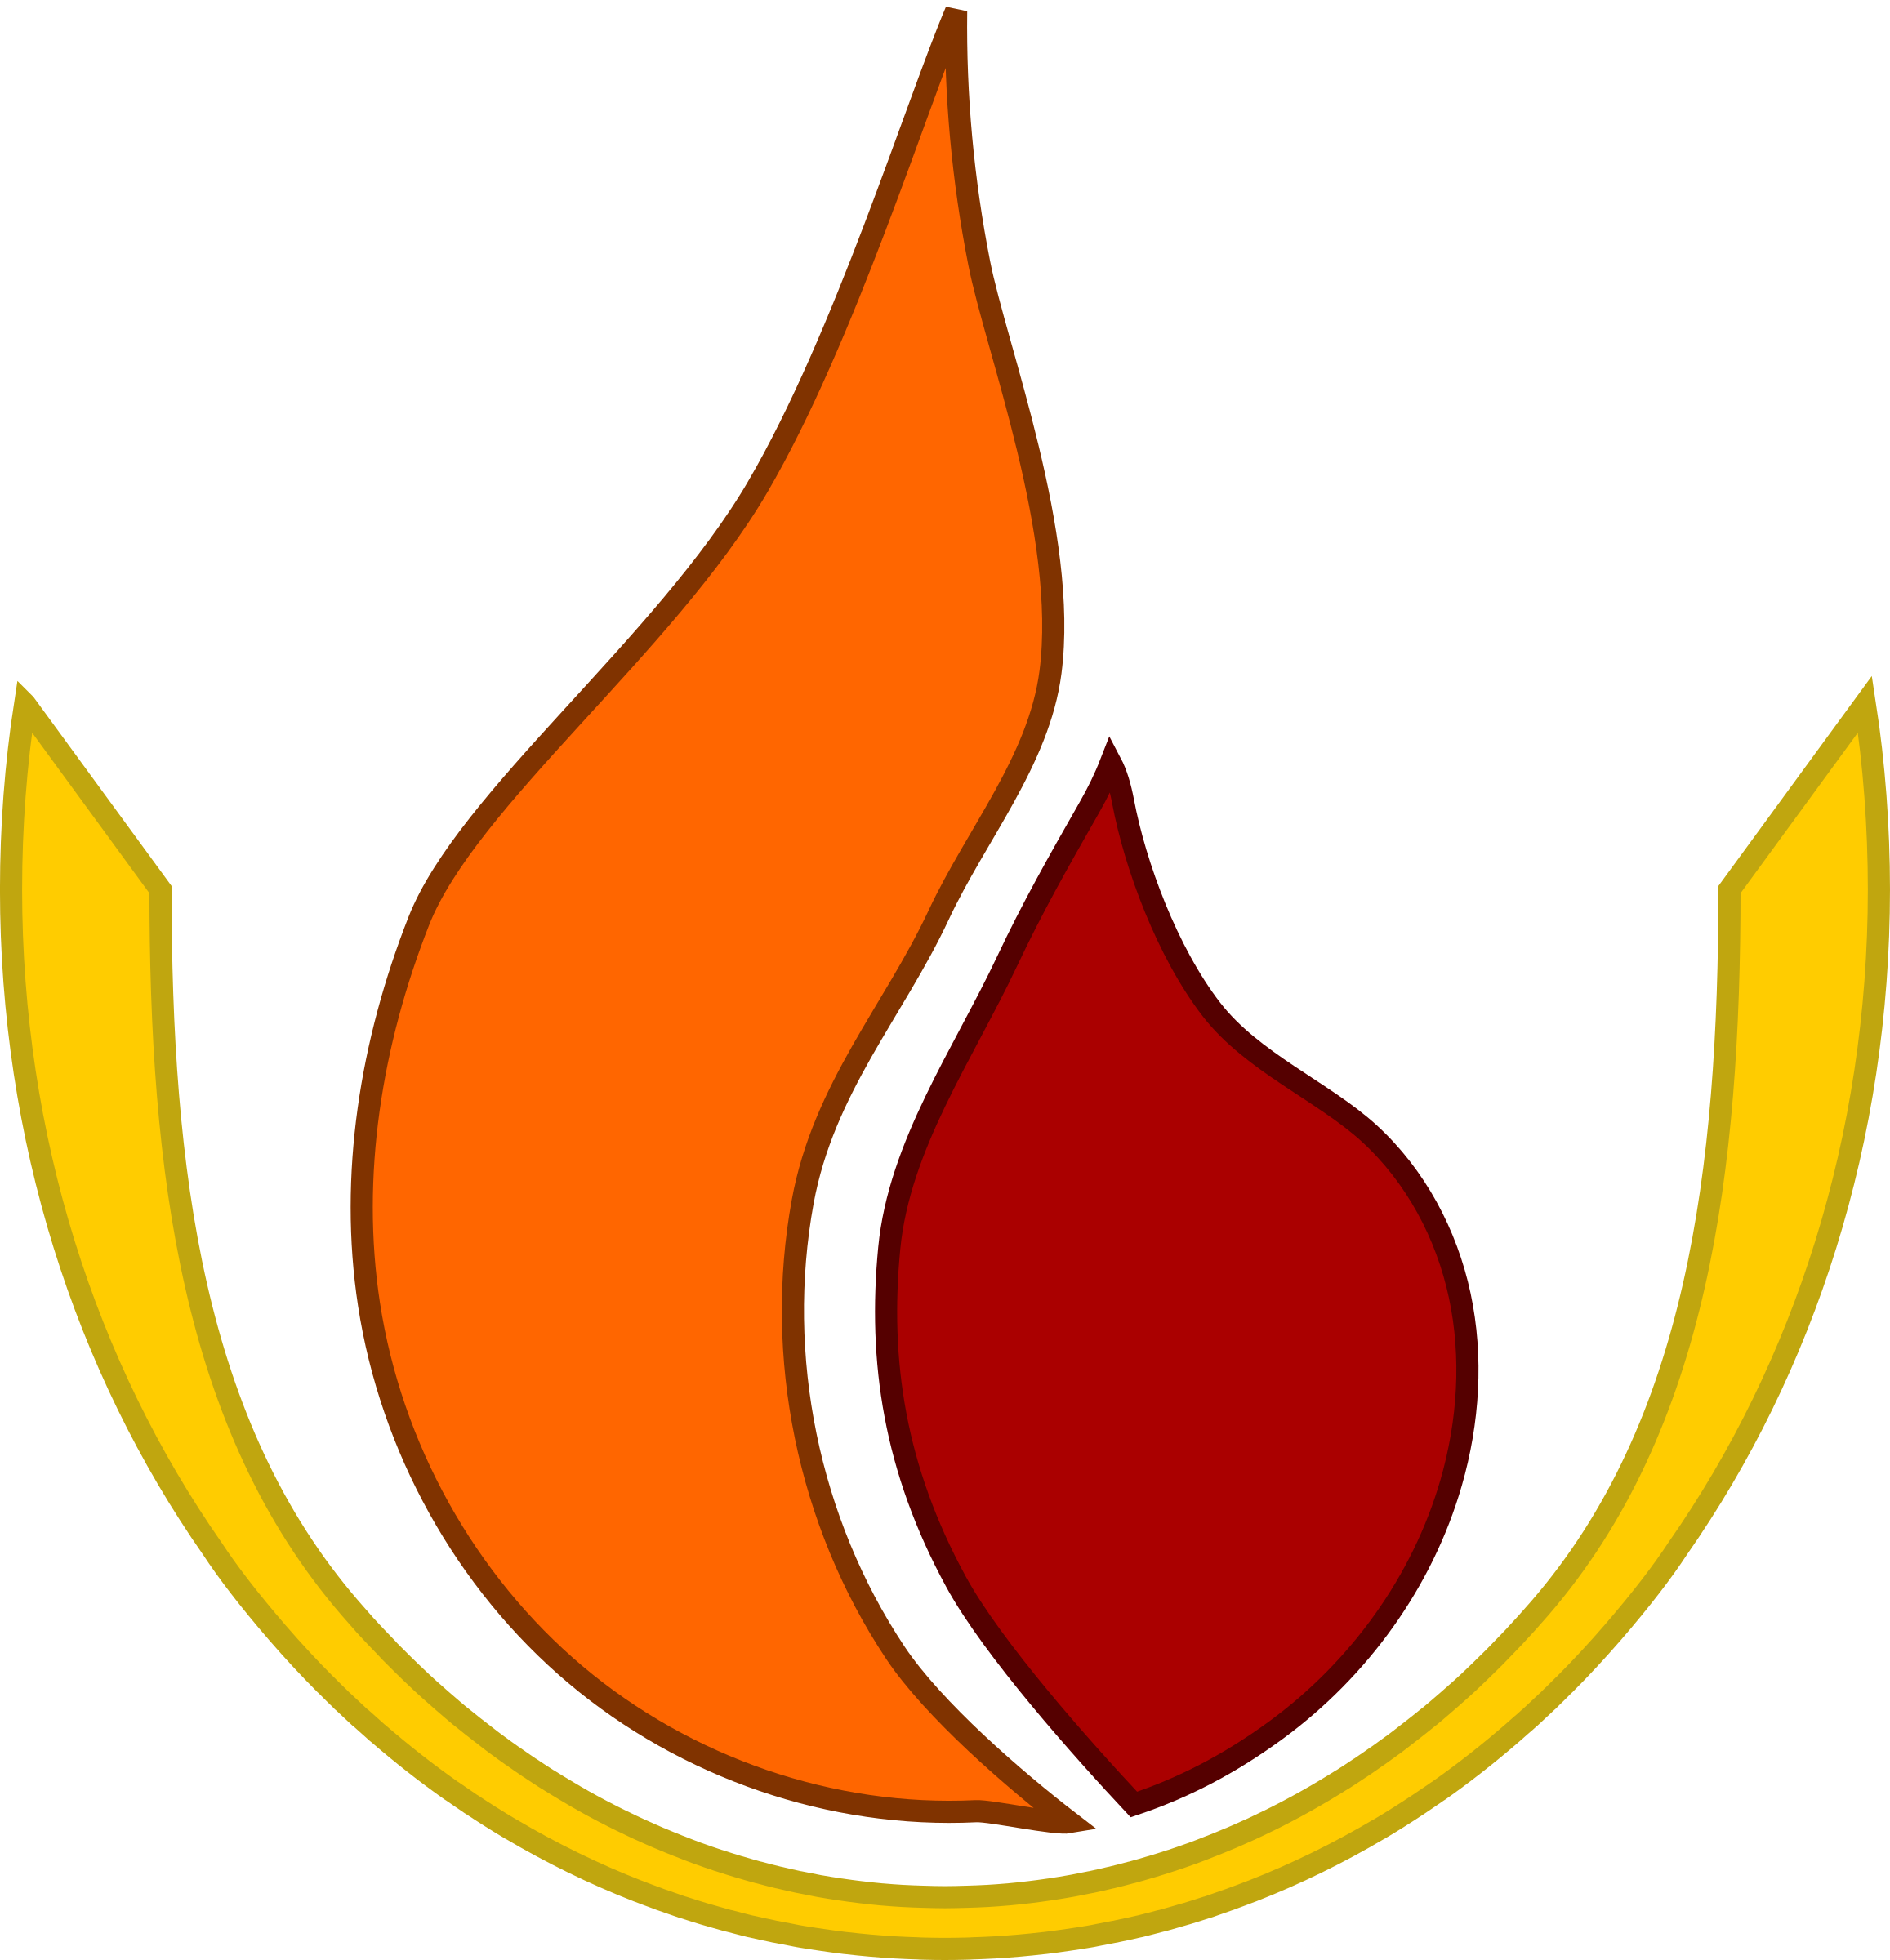 Flame logo big image. Clipart flames pdf